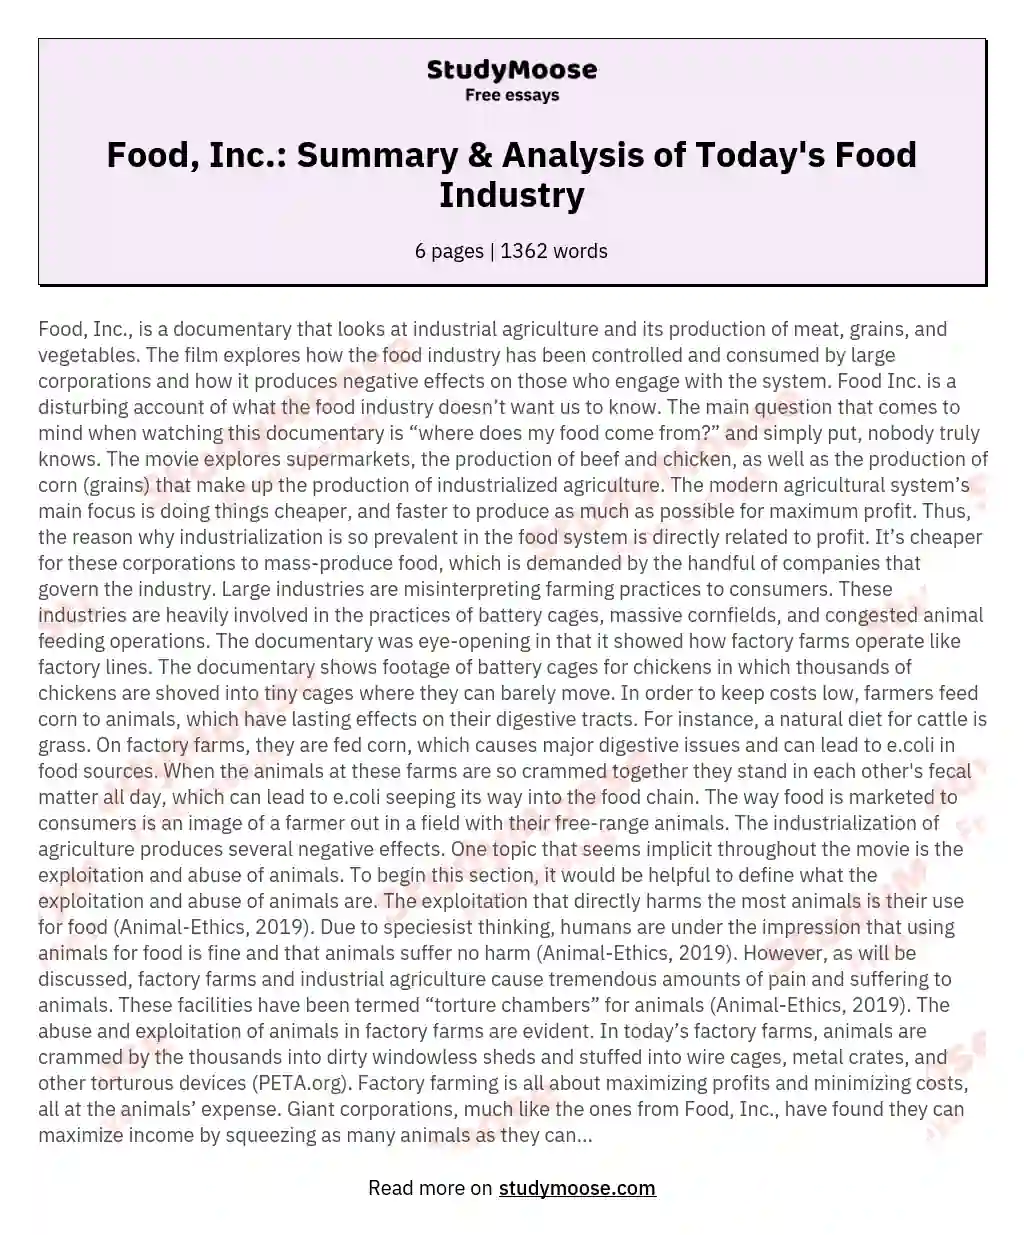 Food, Inc.: Summary & Analysis of Today's Food Industry essay